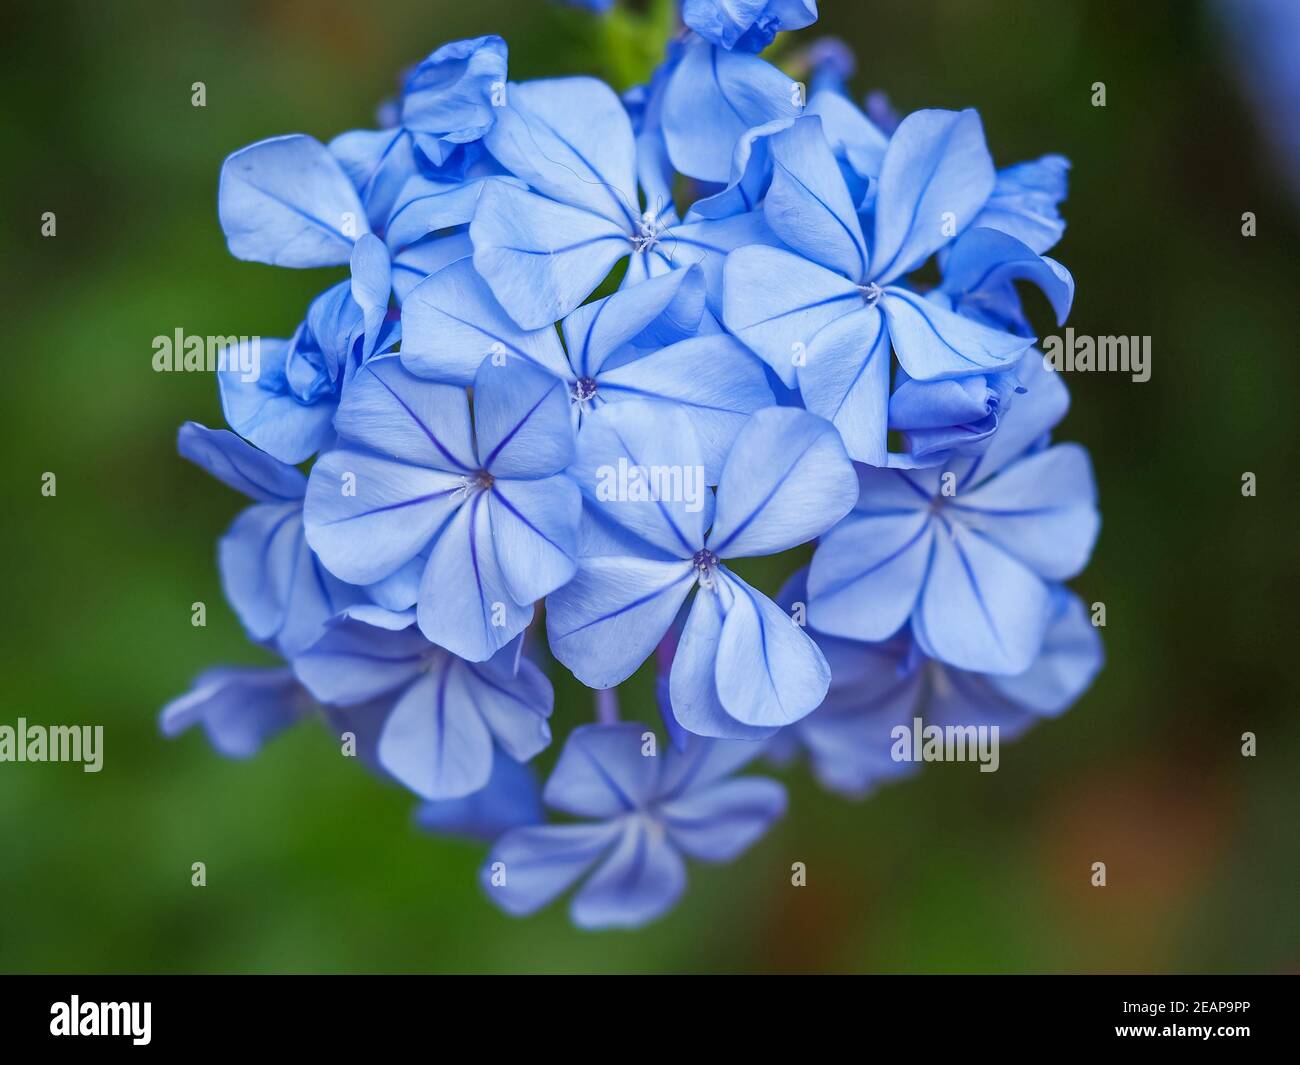 Blue flower cluster of Plumbago auriculata or Cape plumbago Stock Photo